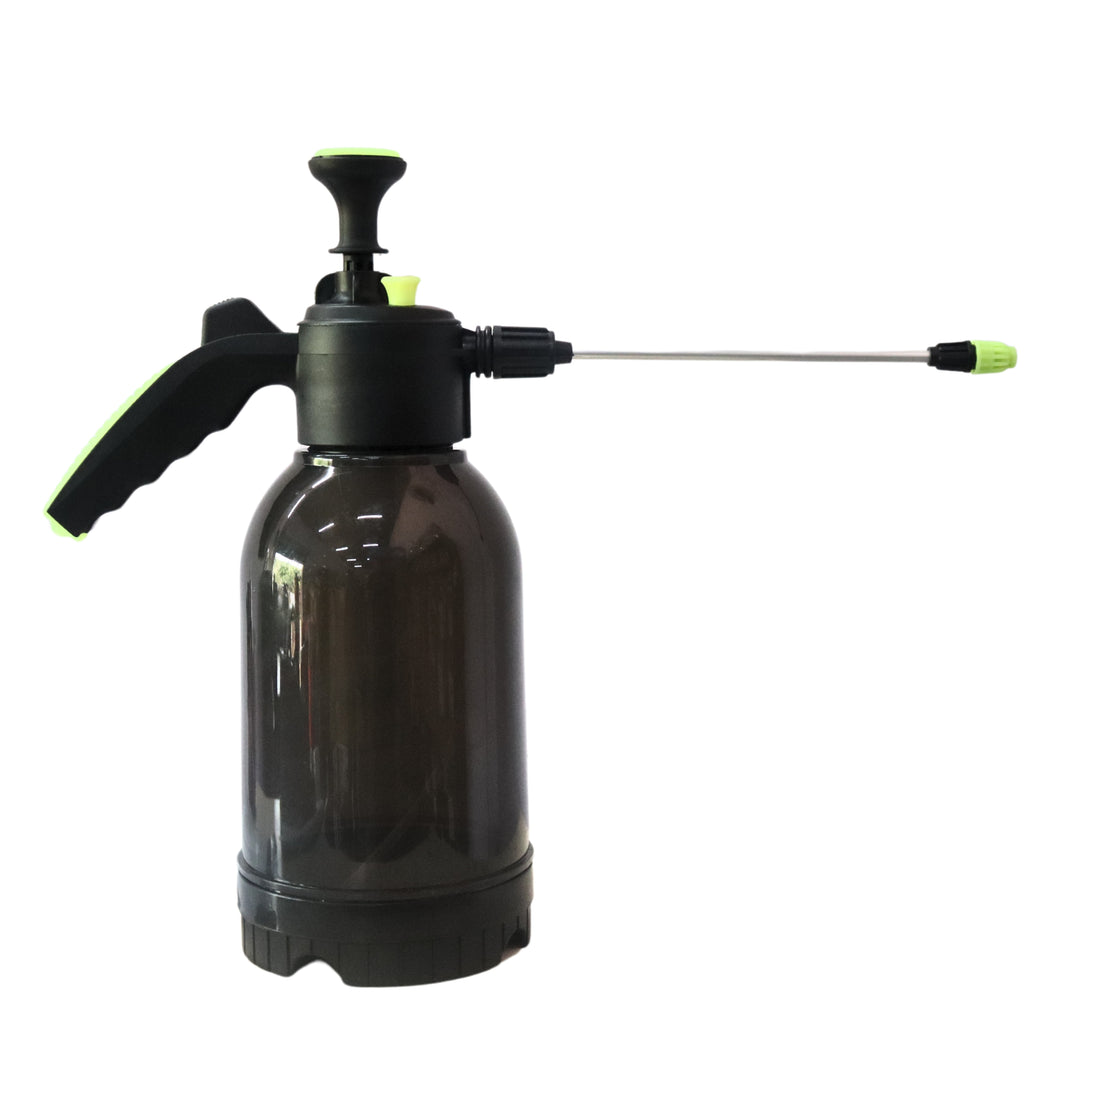 2 Litre Heavy Duty Garden Pressure Sprayer – Black Colour